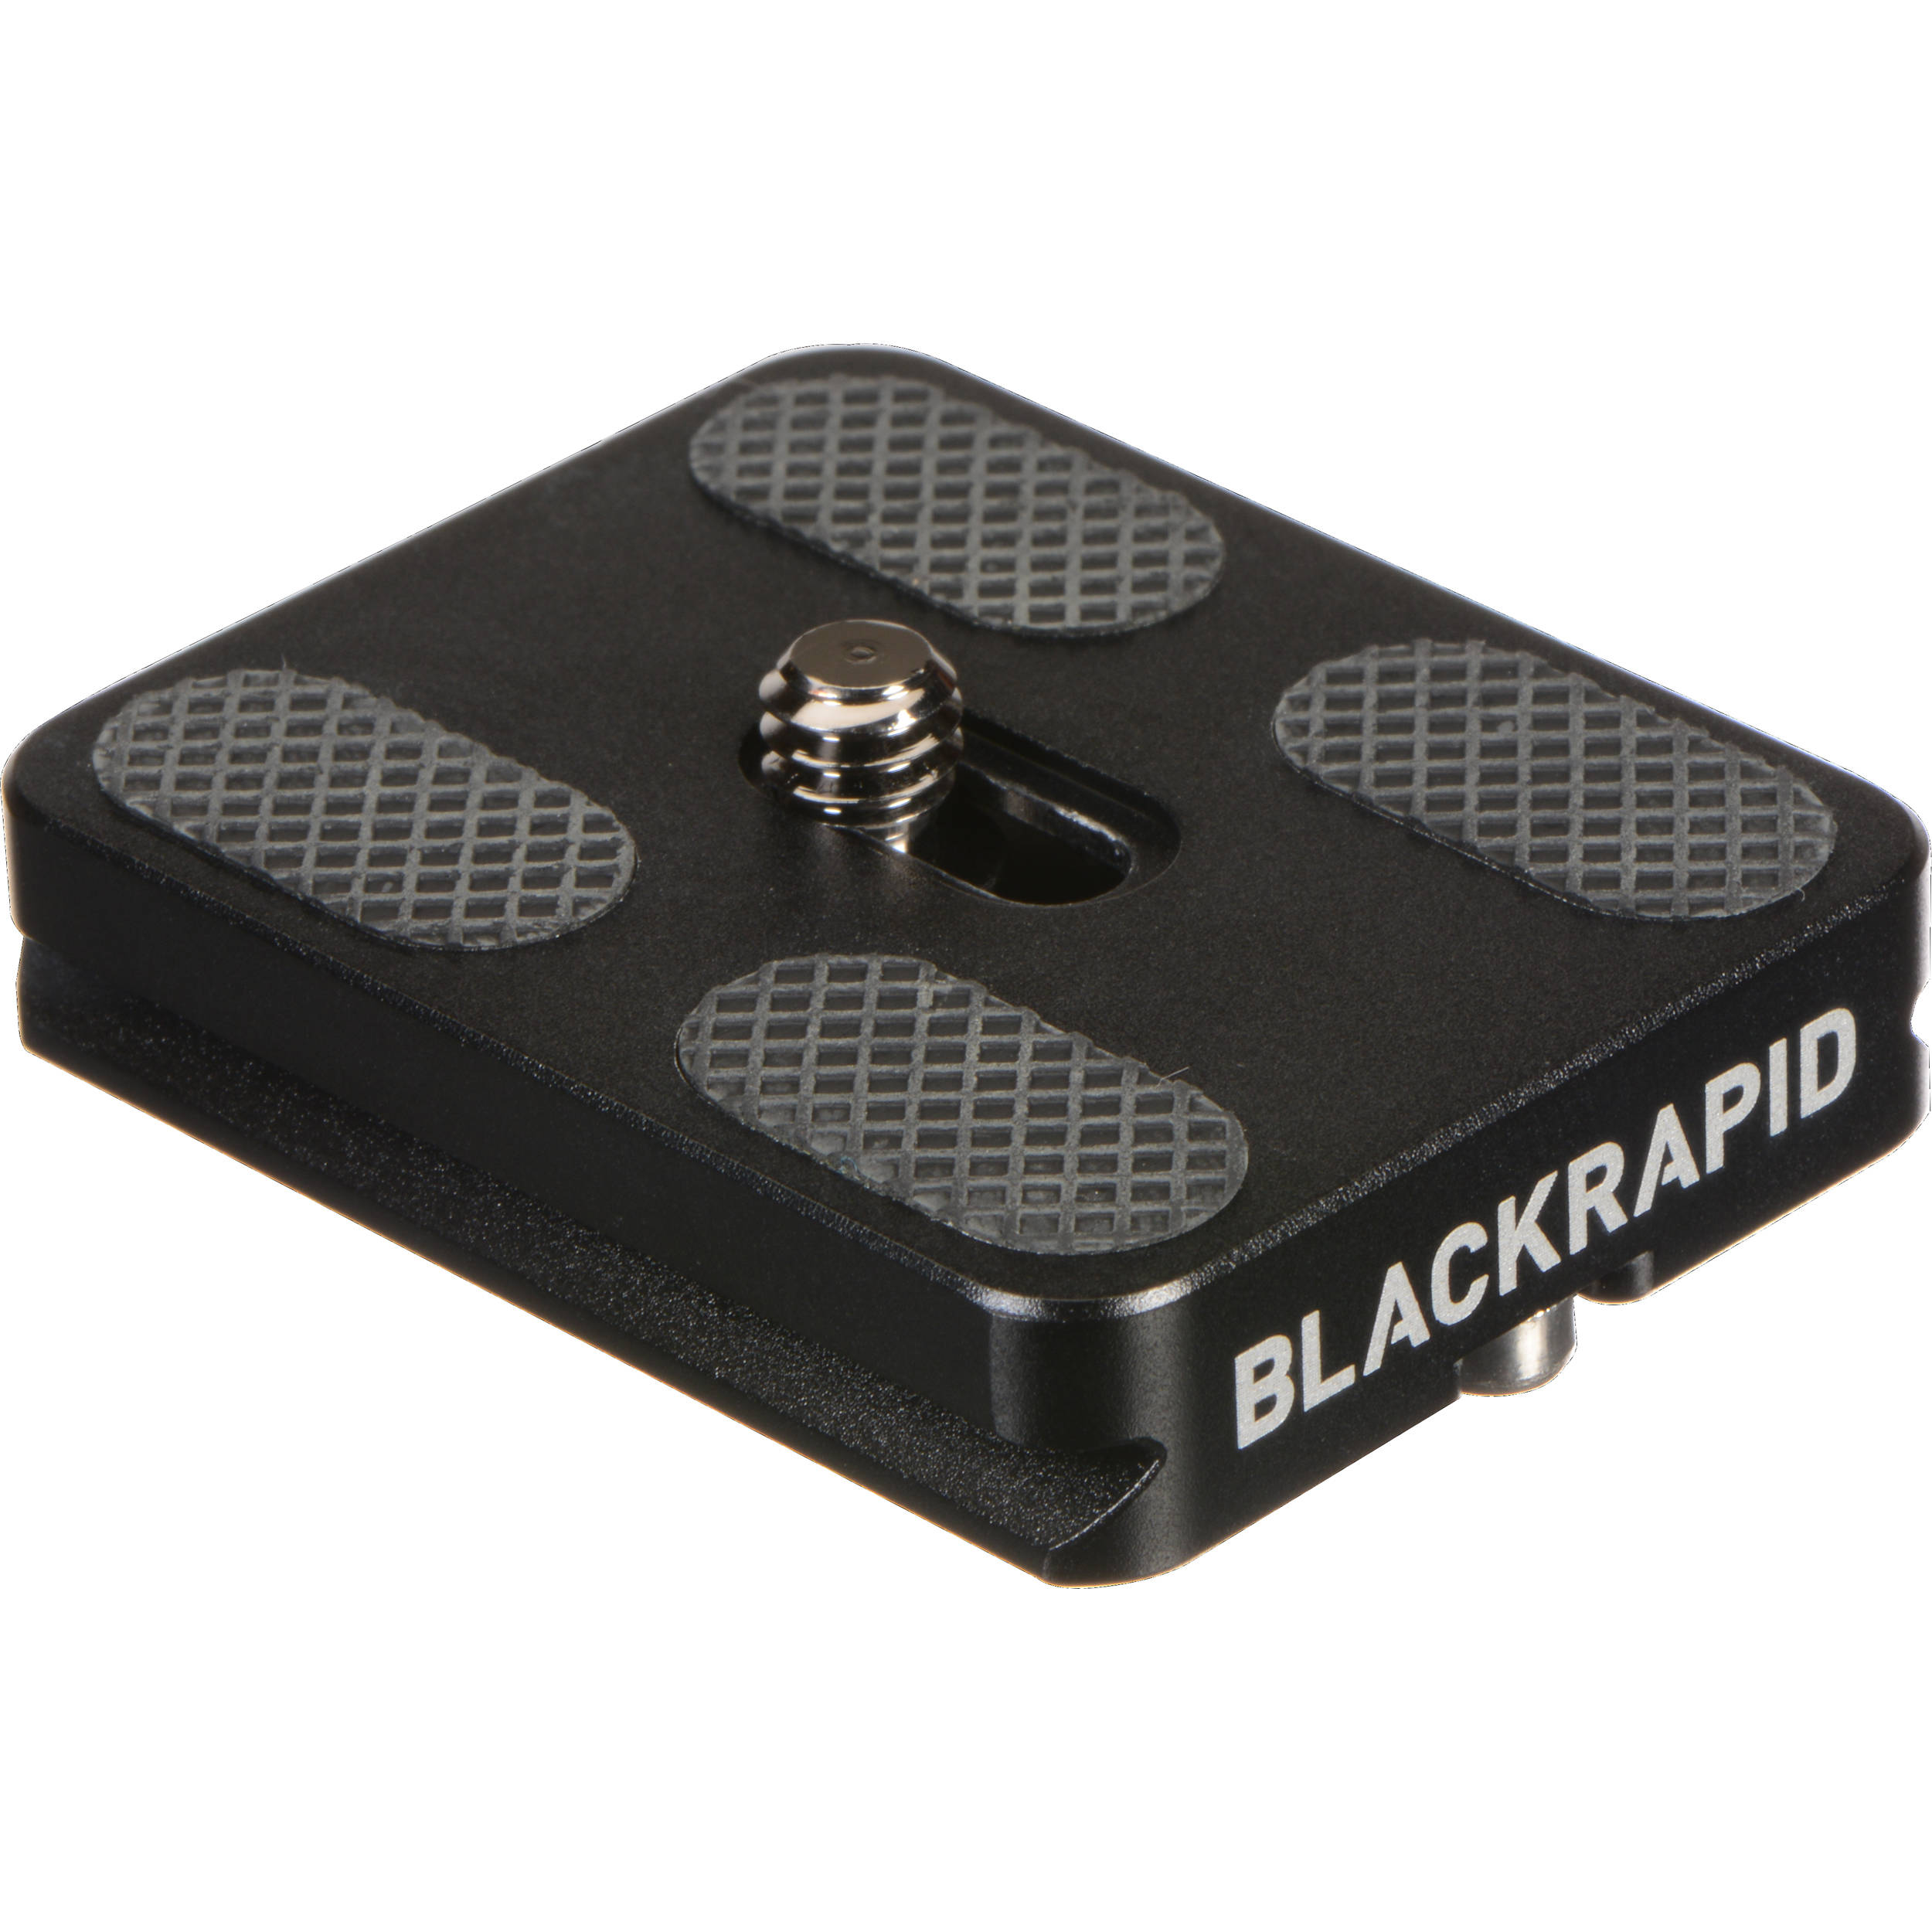 BlackRapid Arca Tripod Plate 50